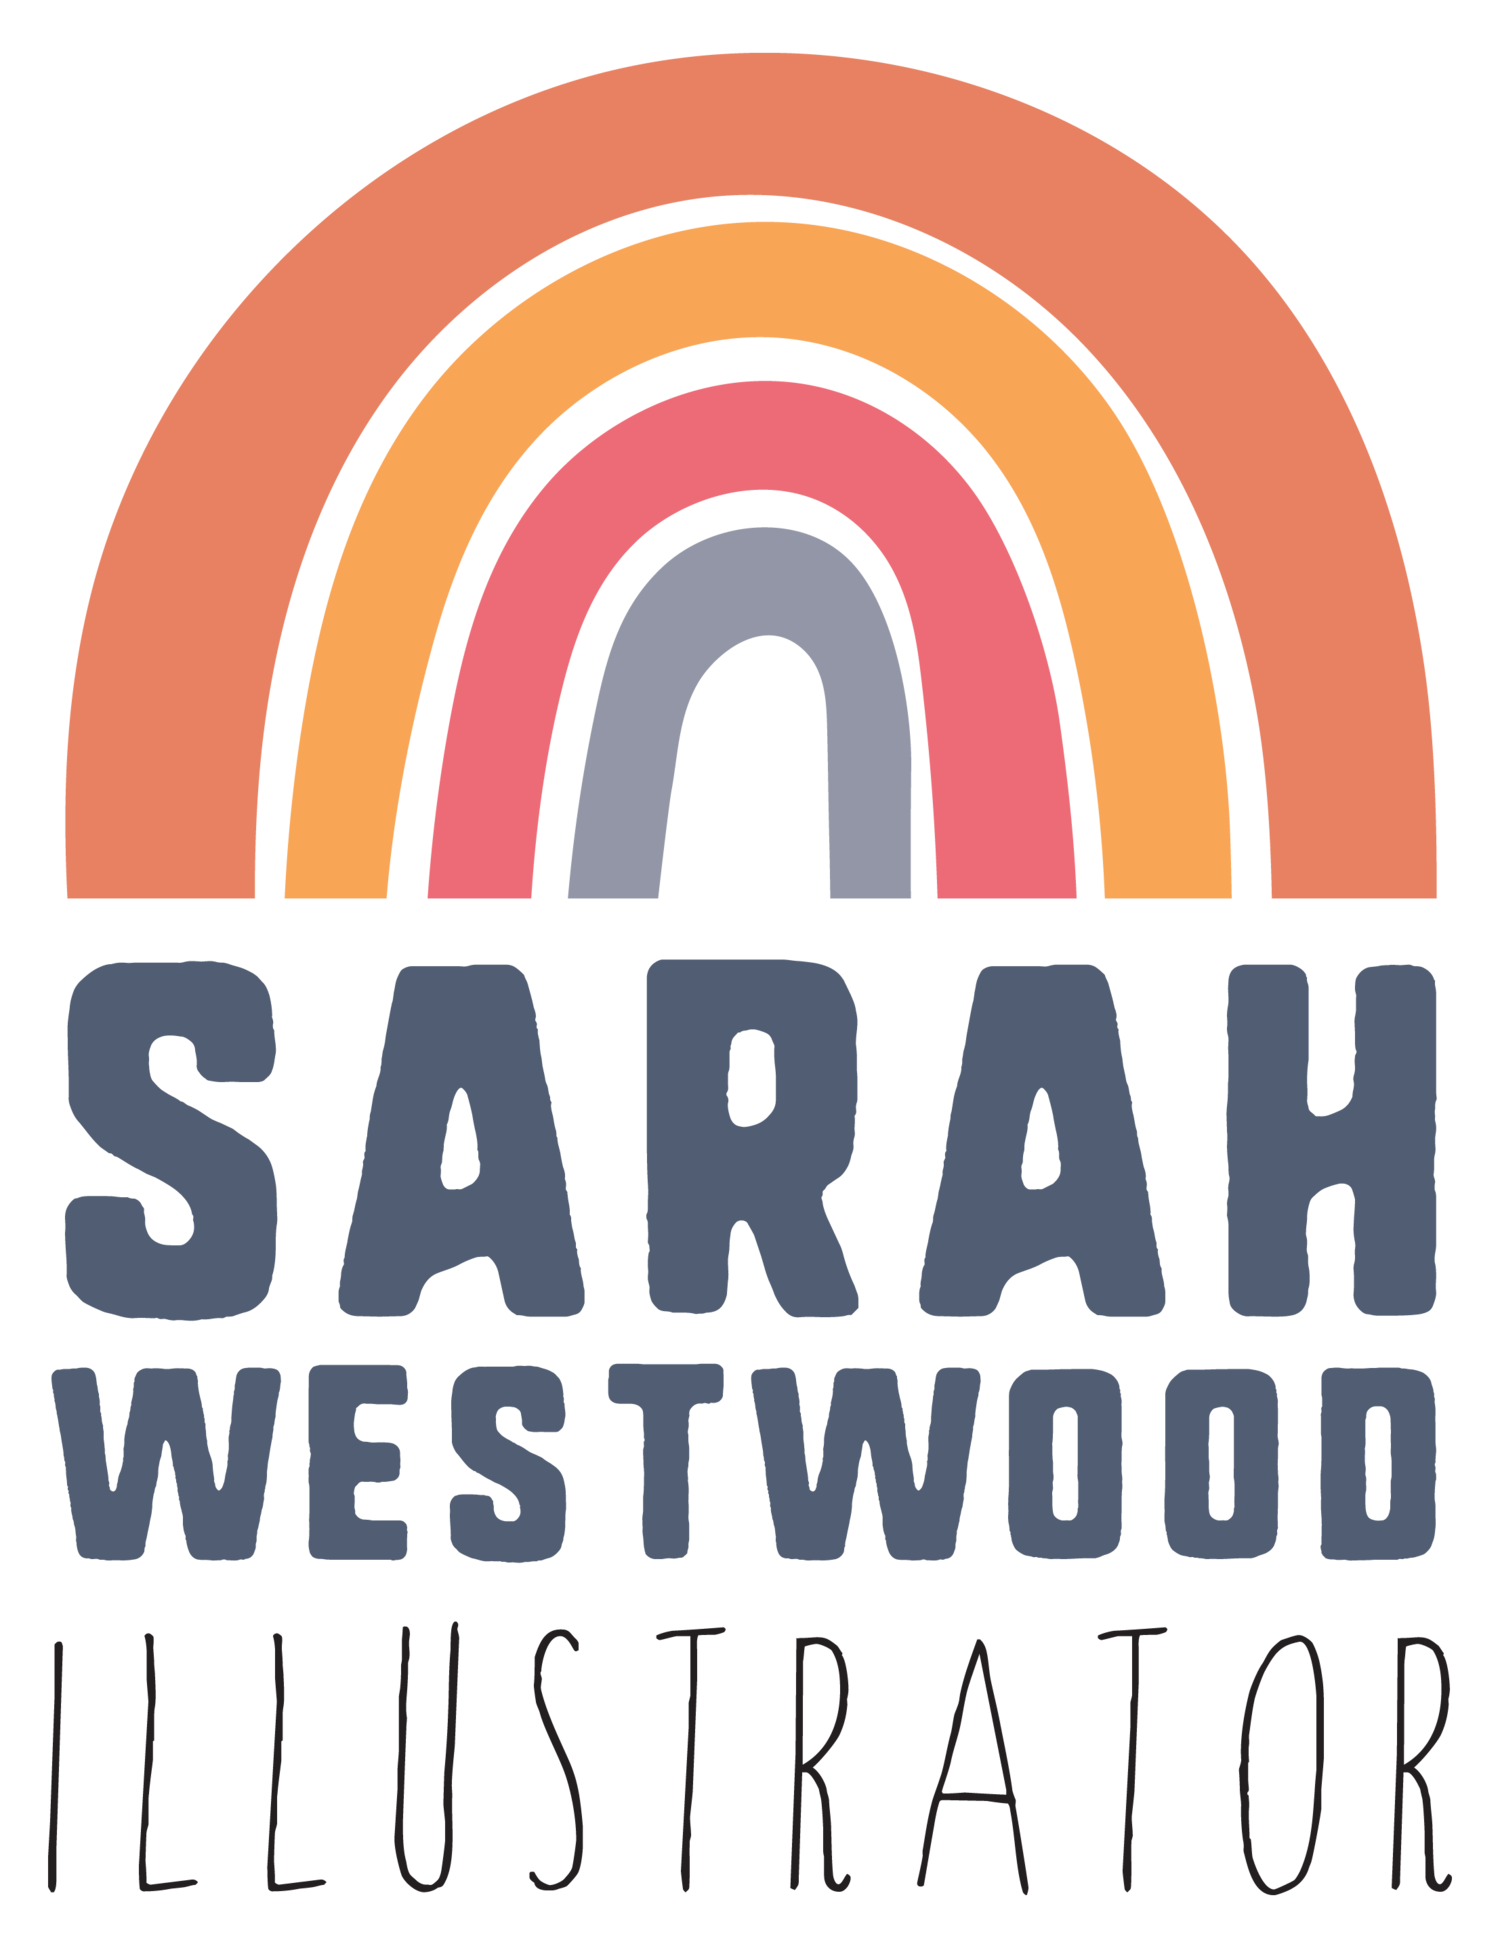 Sarah Westwood Illustrator